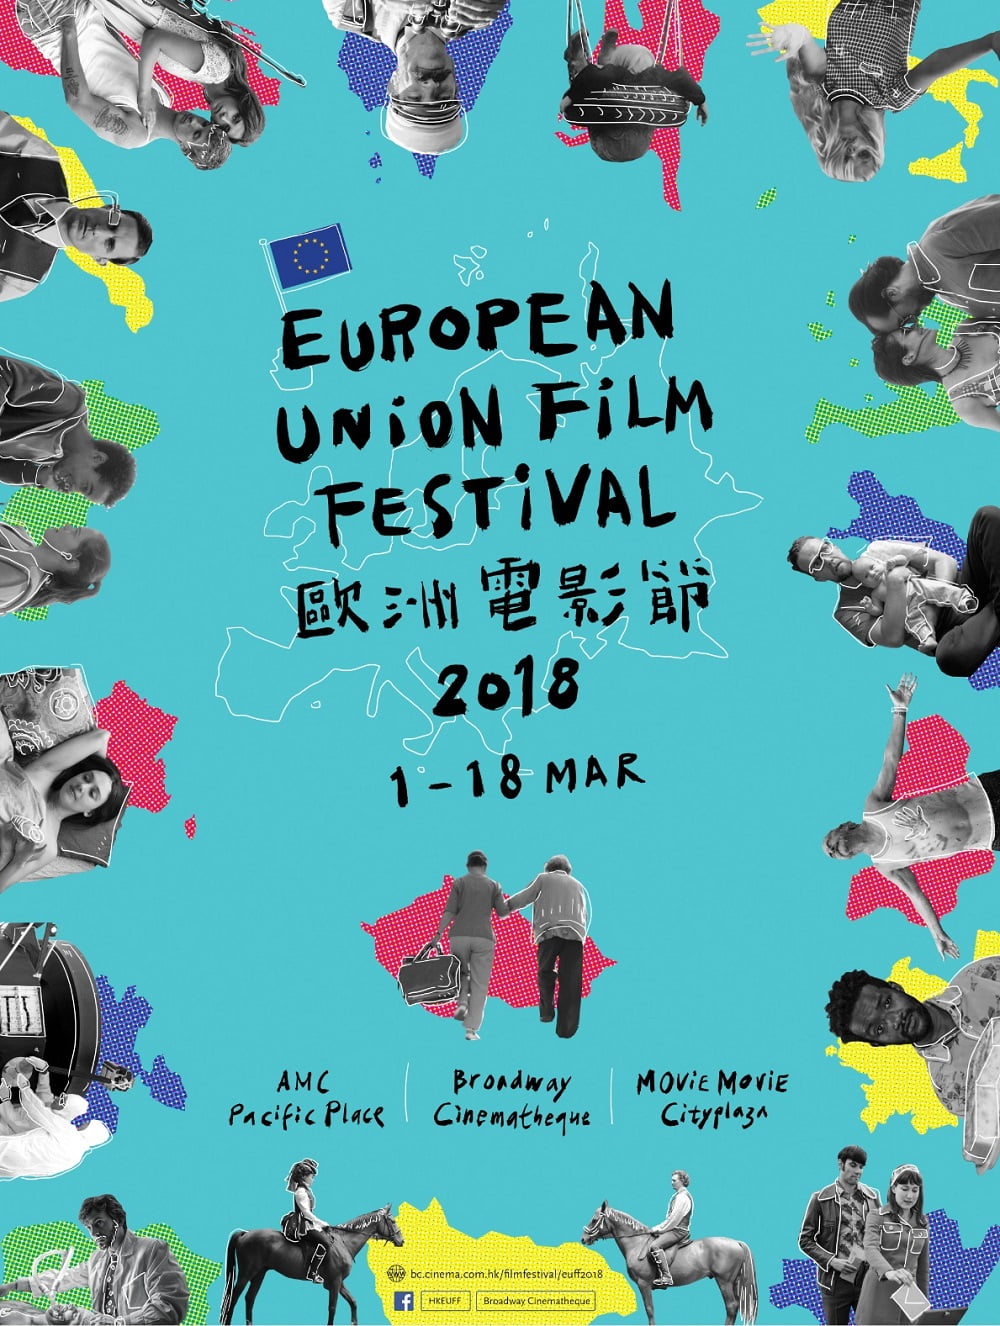 European Union Film Festival 2018